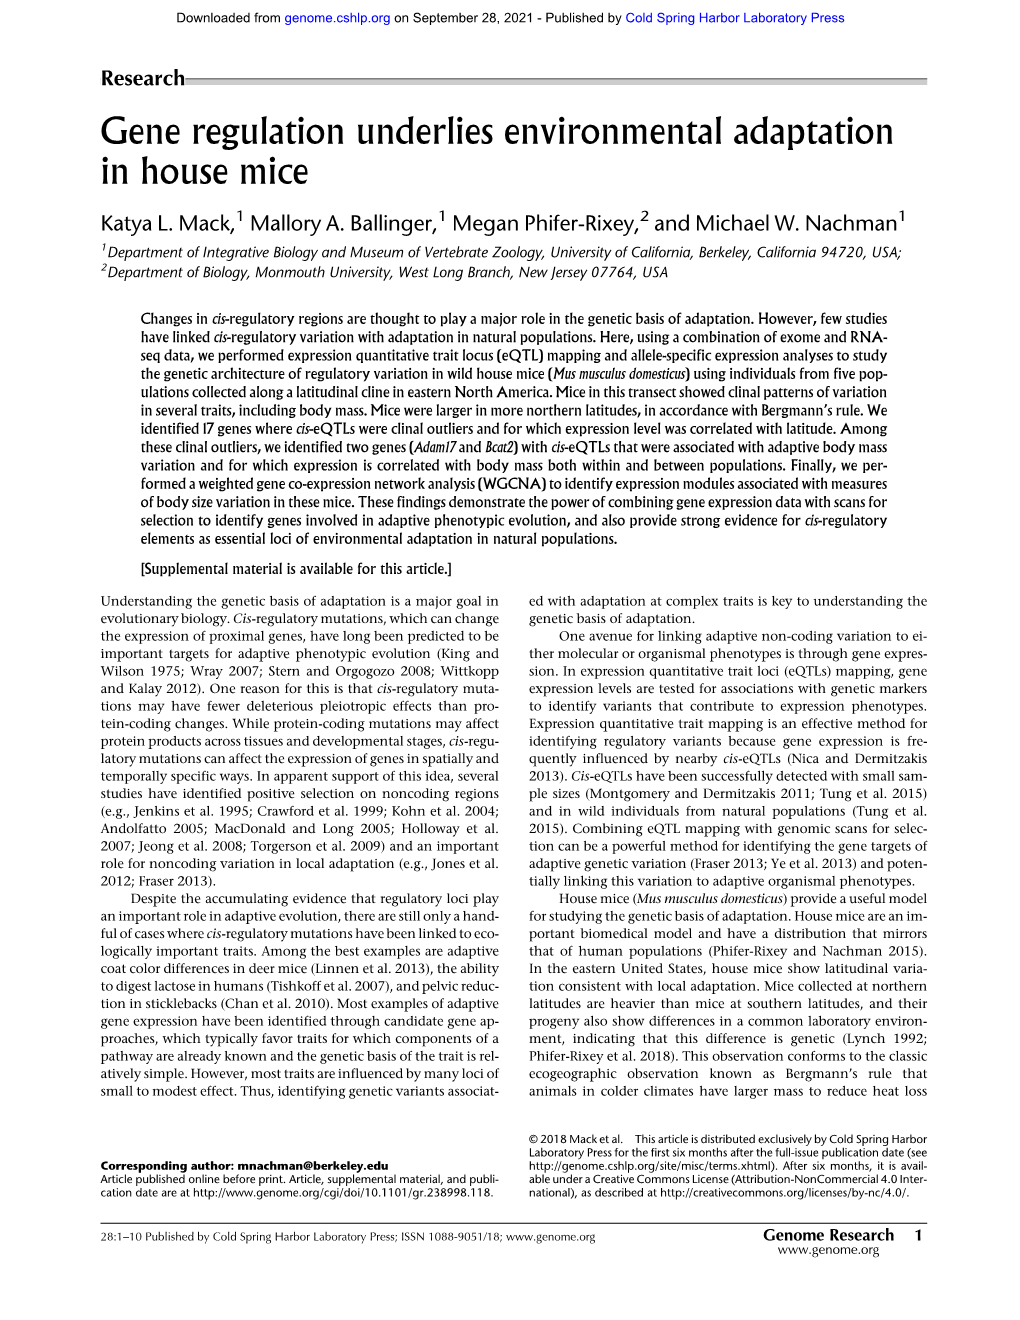 Gene Regulation Underlies Environmental Adaptation in House Mice